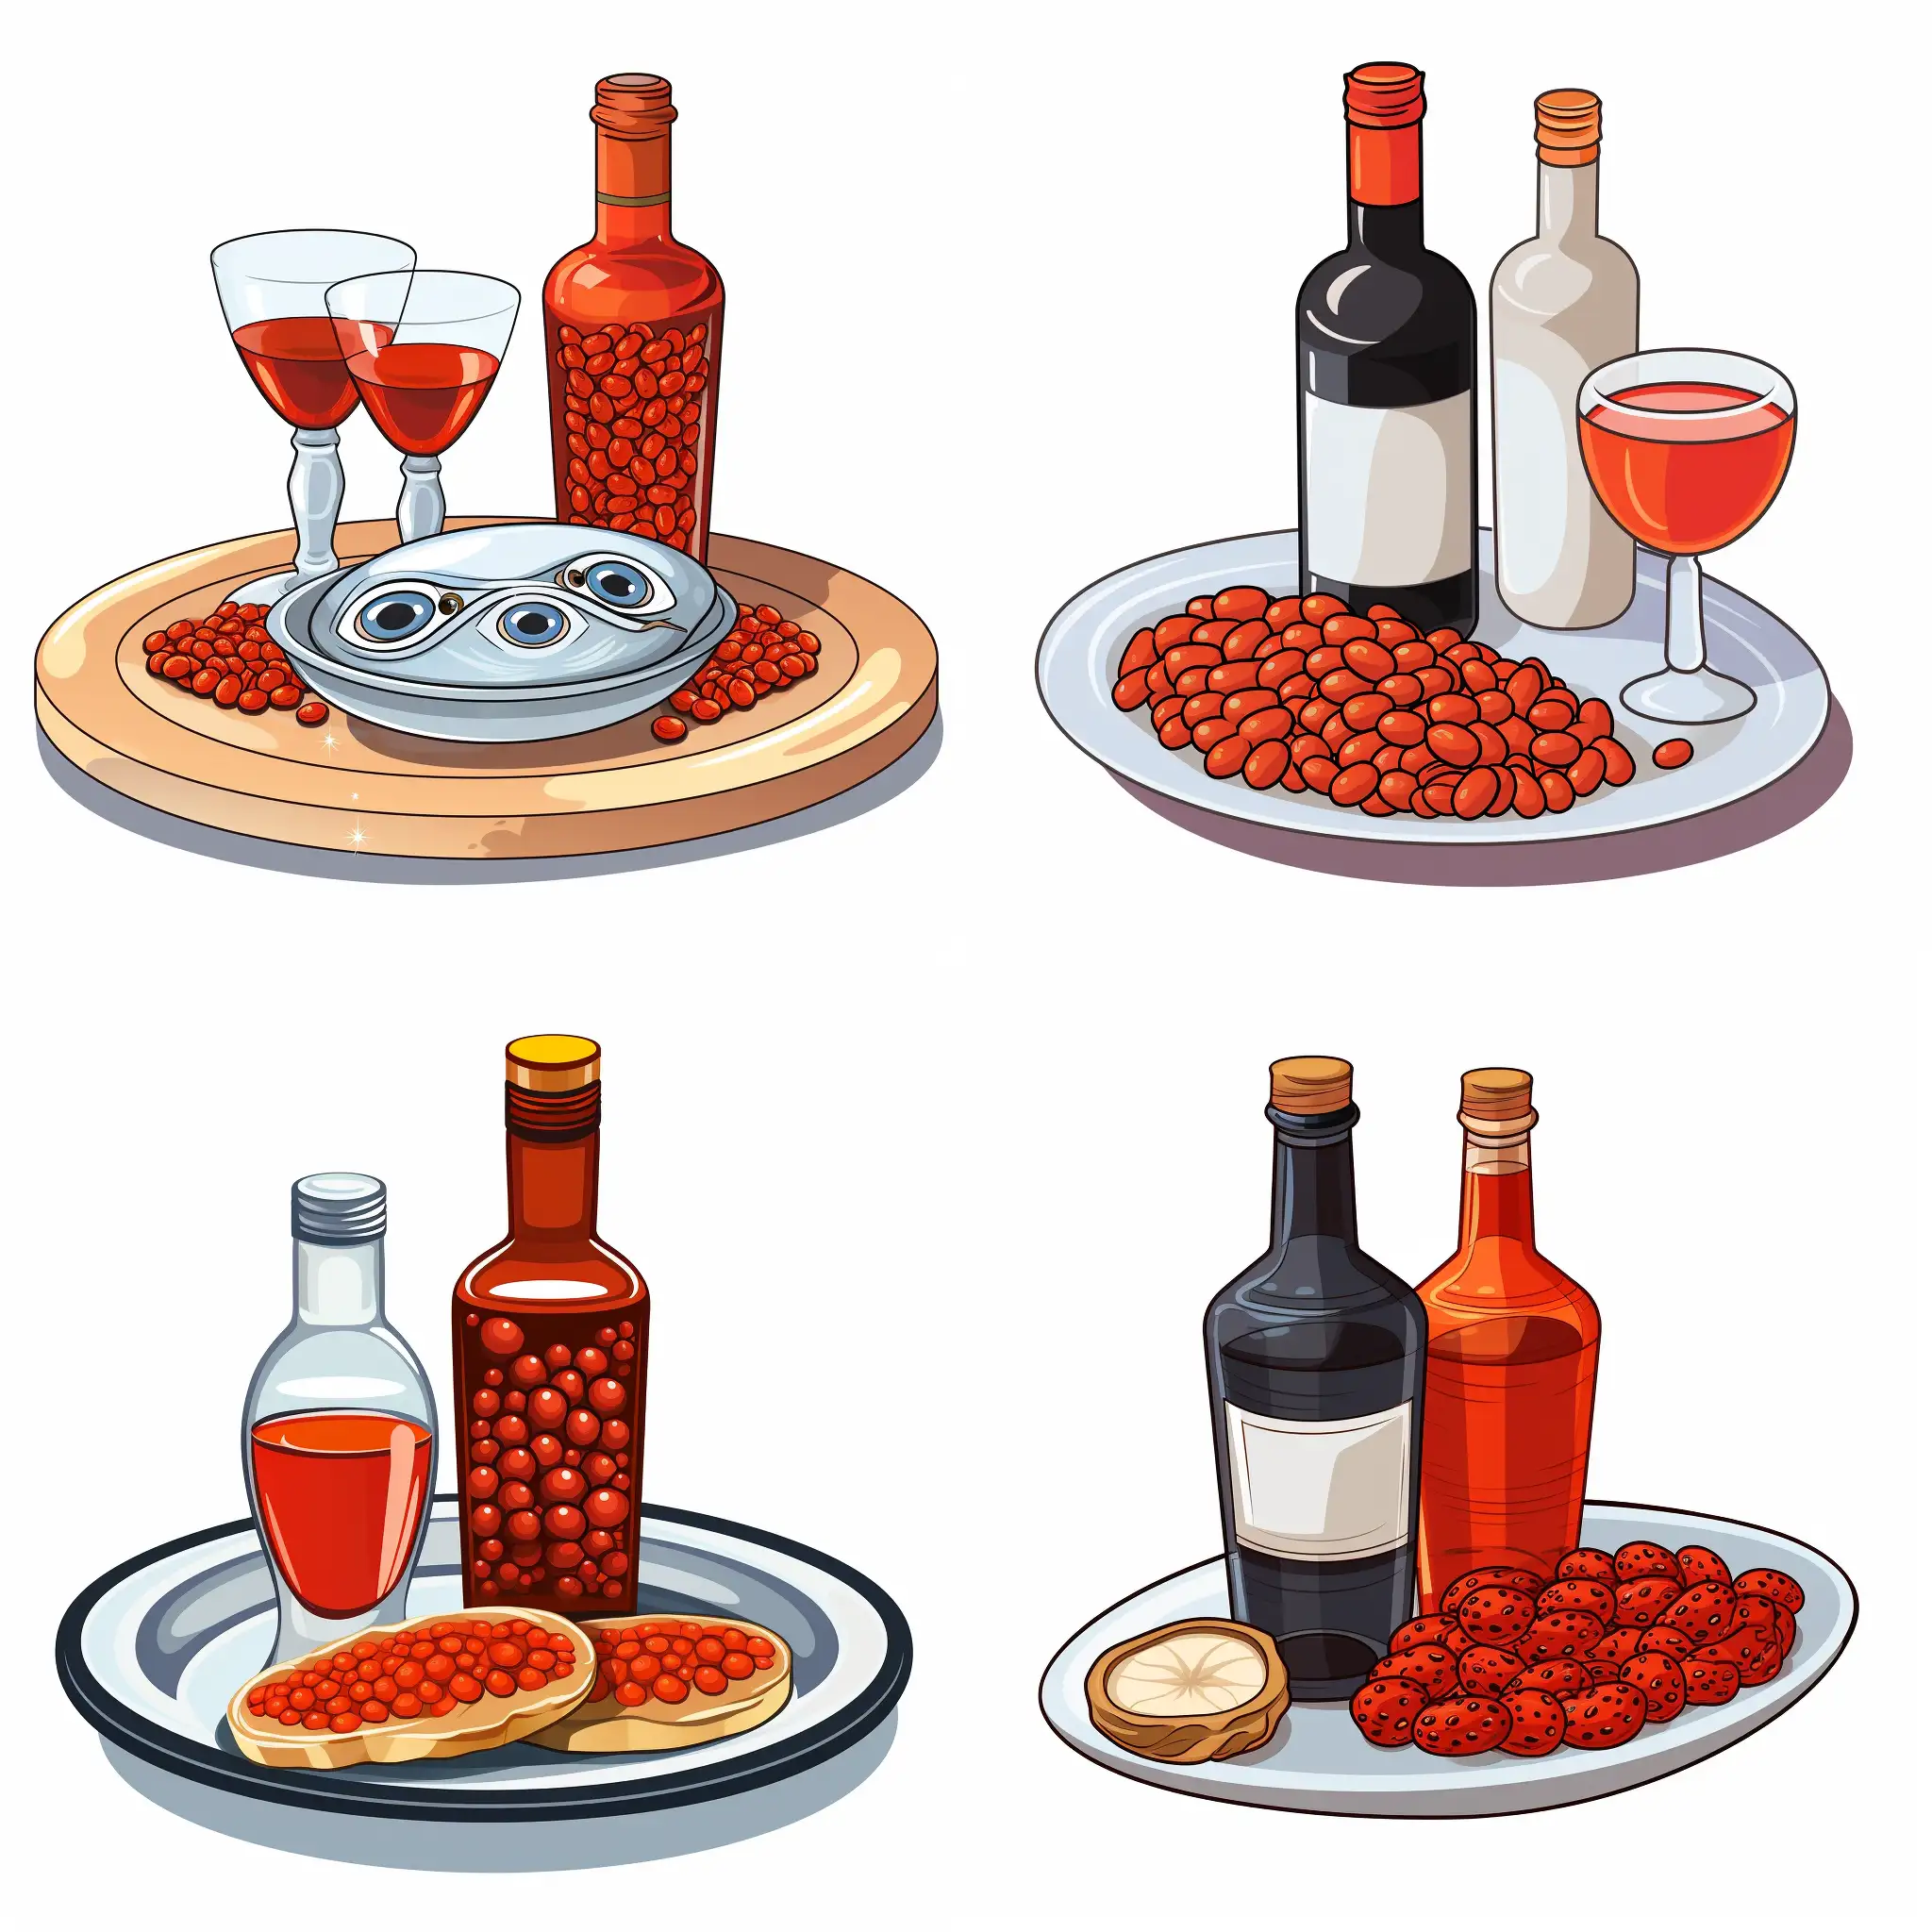 Celebratory-Vodka-and-Red-Caviar-Illustration-on-White-Background